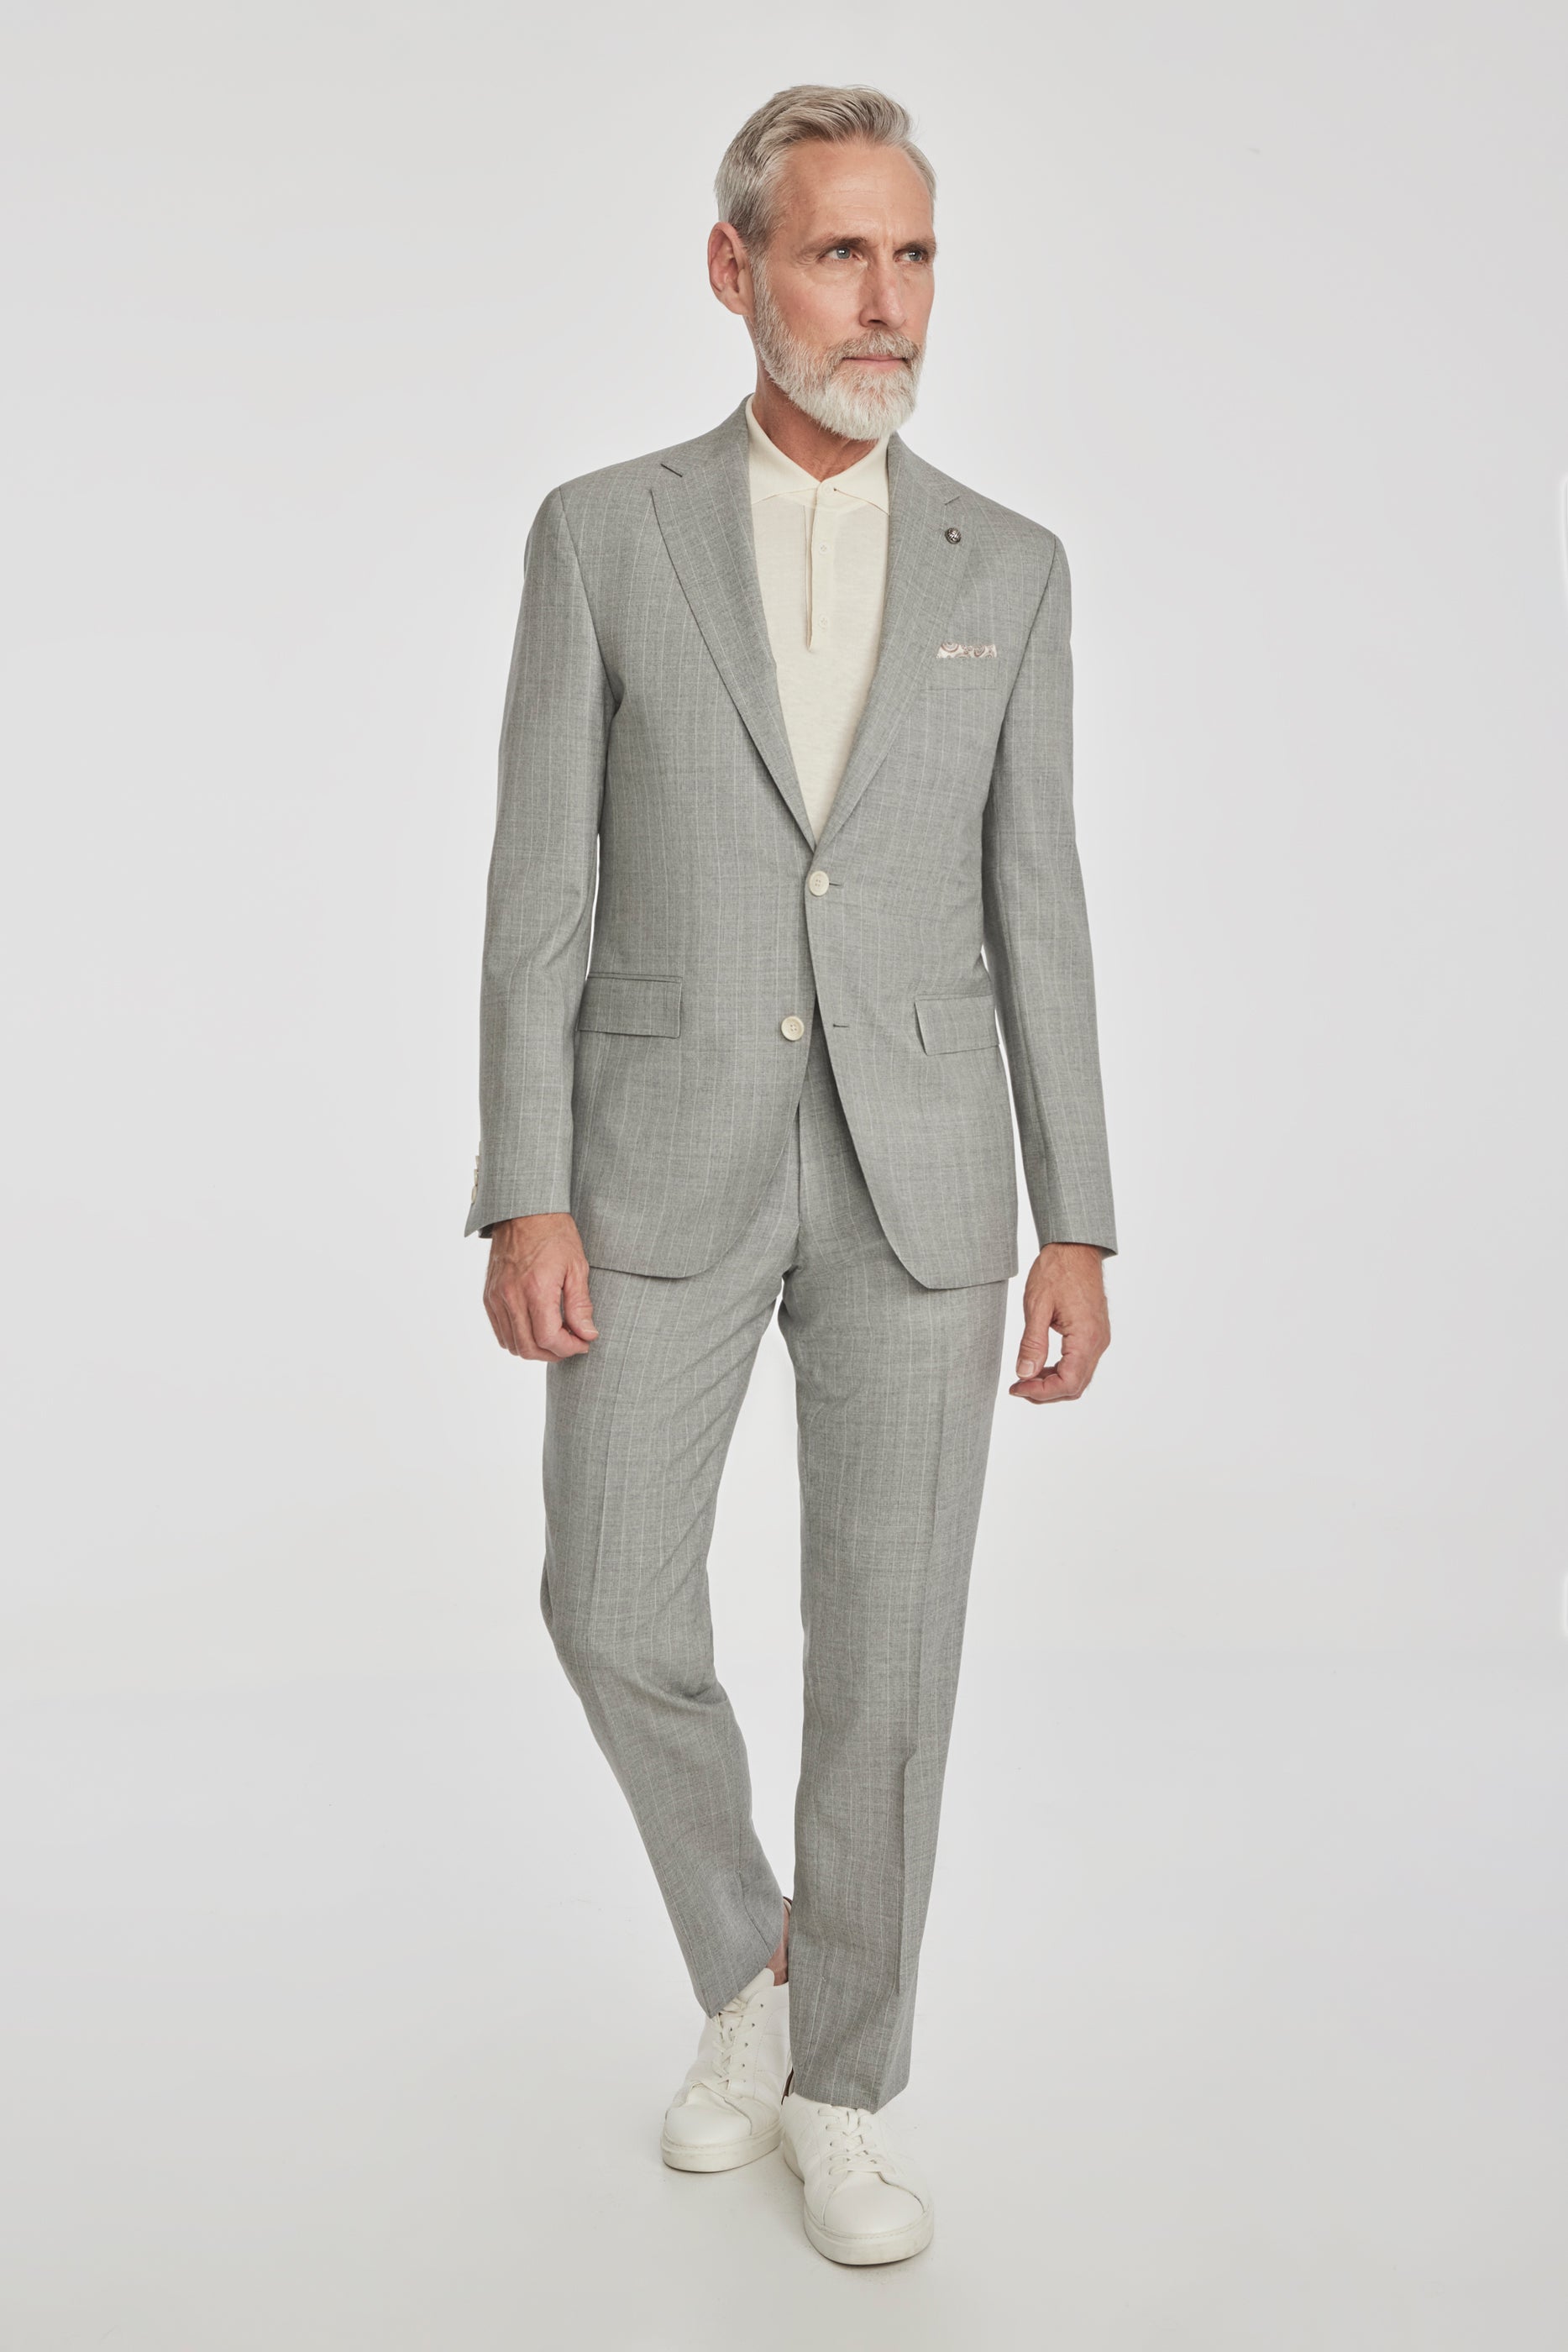 Alt view Esprit Pinstripe Wool Suit in Light Grey and Ecru